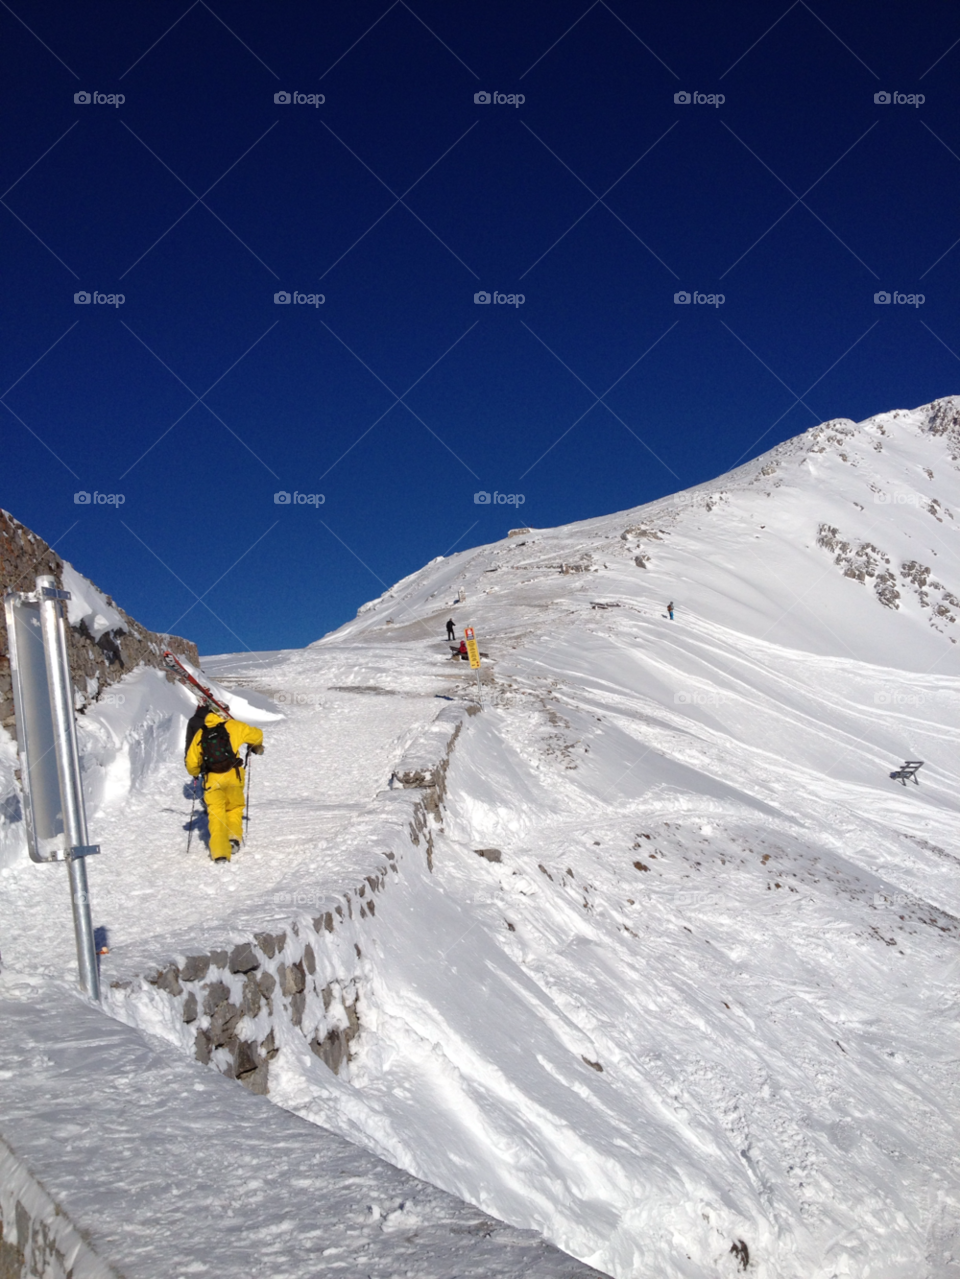 mountain skiing innsbruck by lynn7507